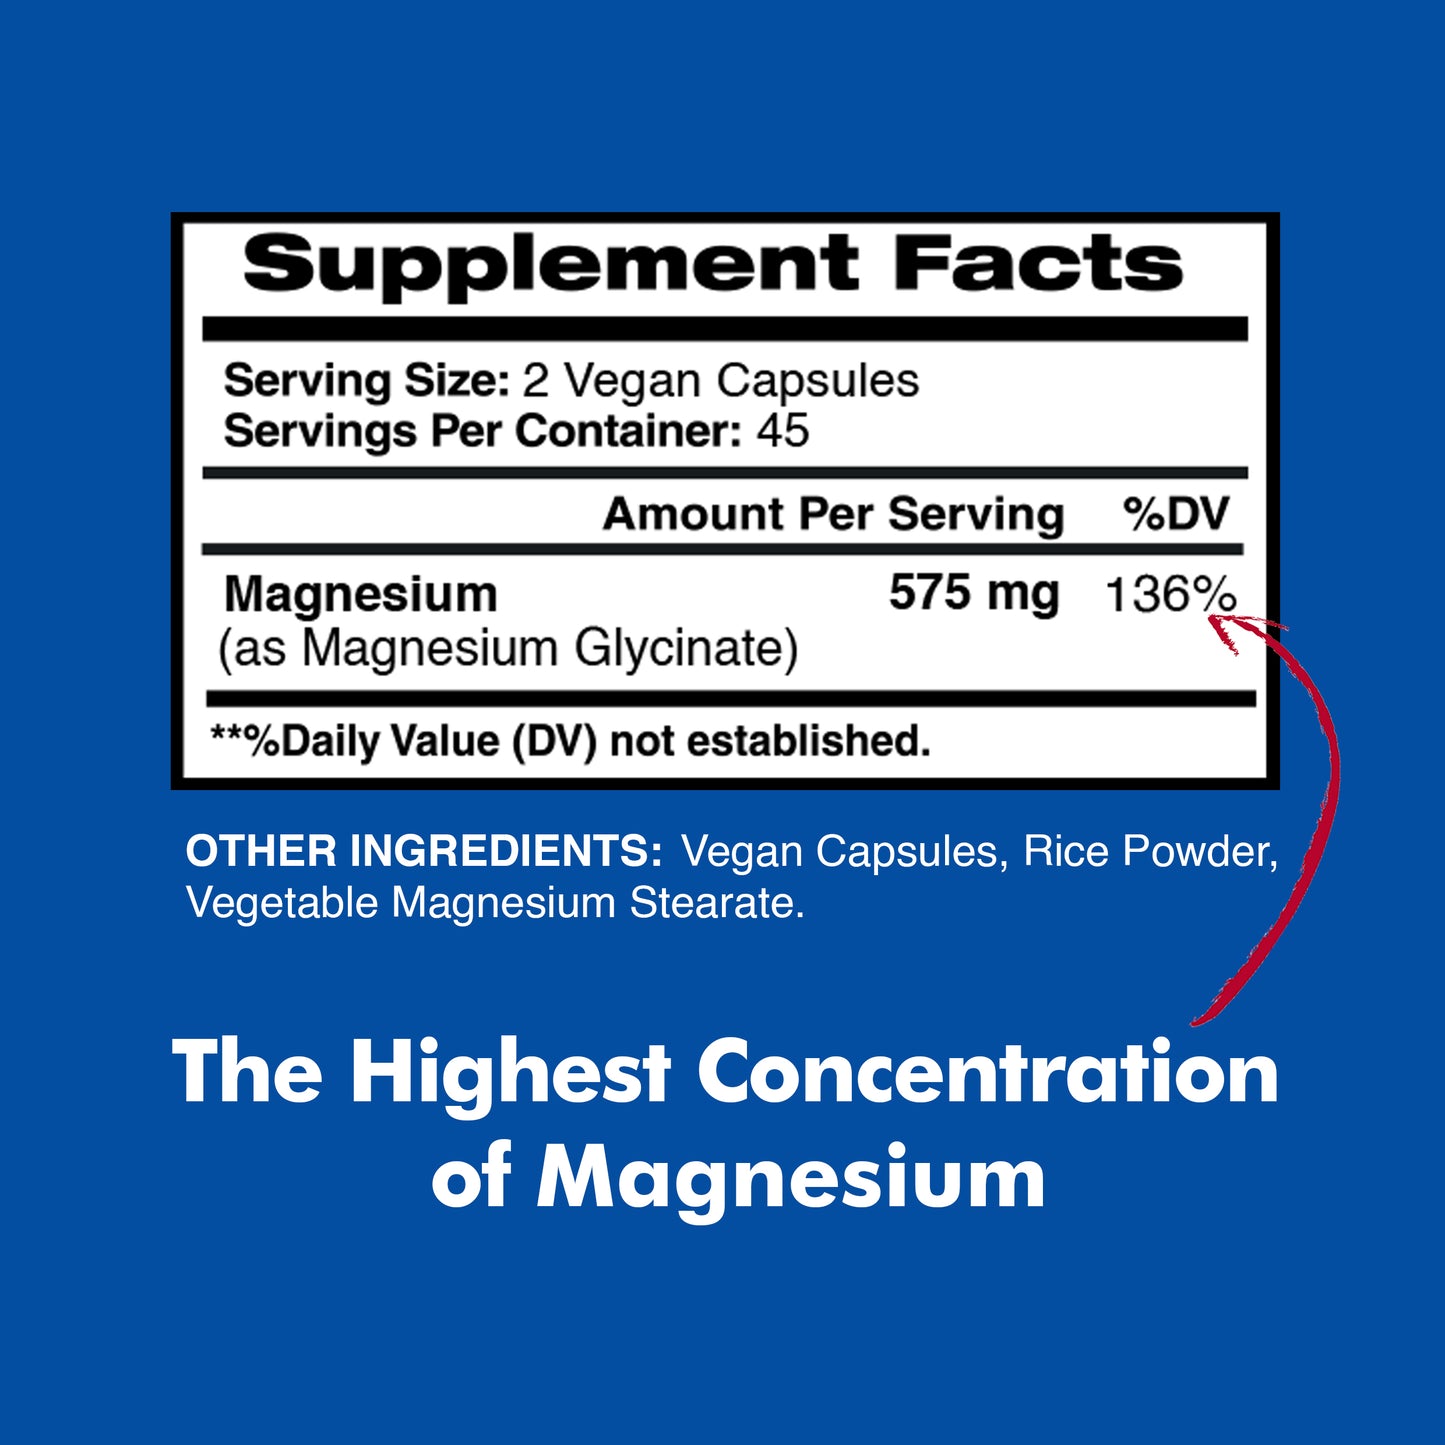 Magnesium 575mg - American Standard Supplements